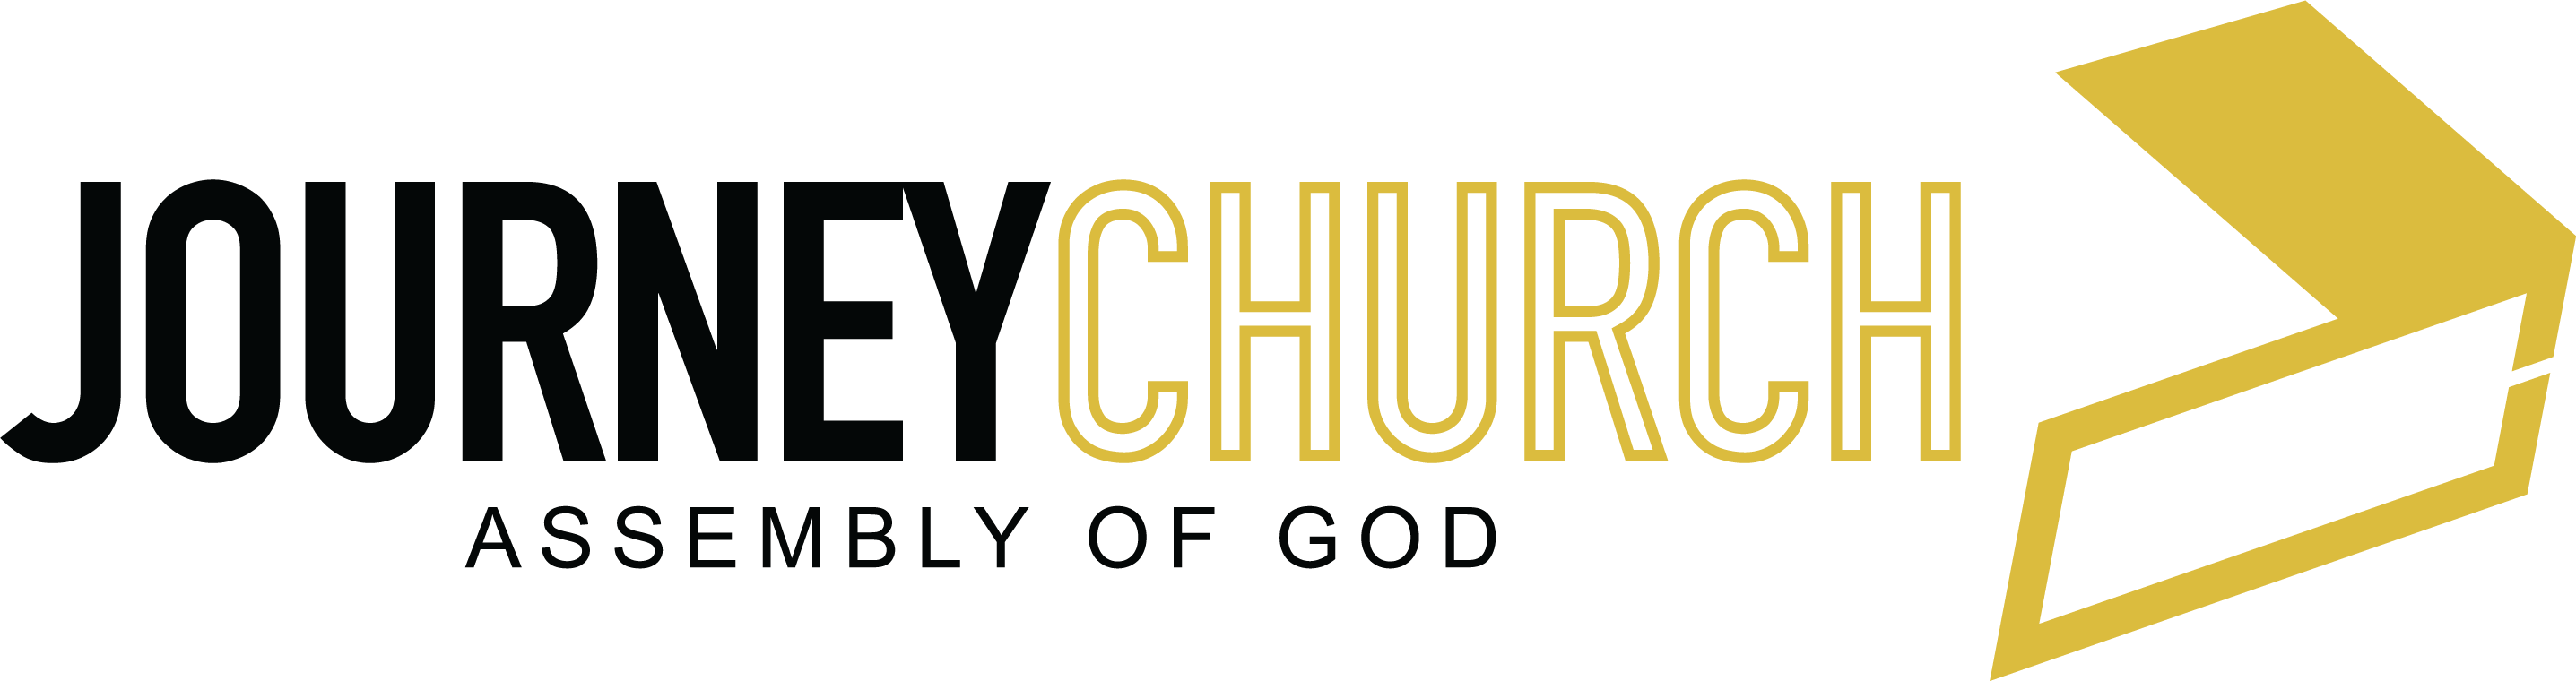 Journey Church Logo_Horz_BY